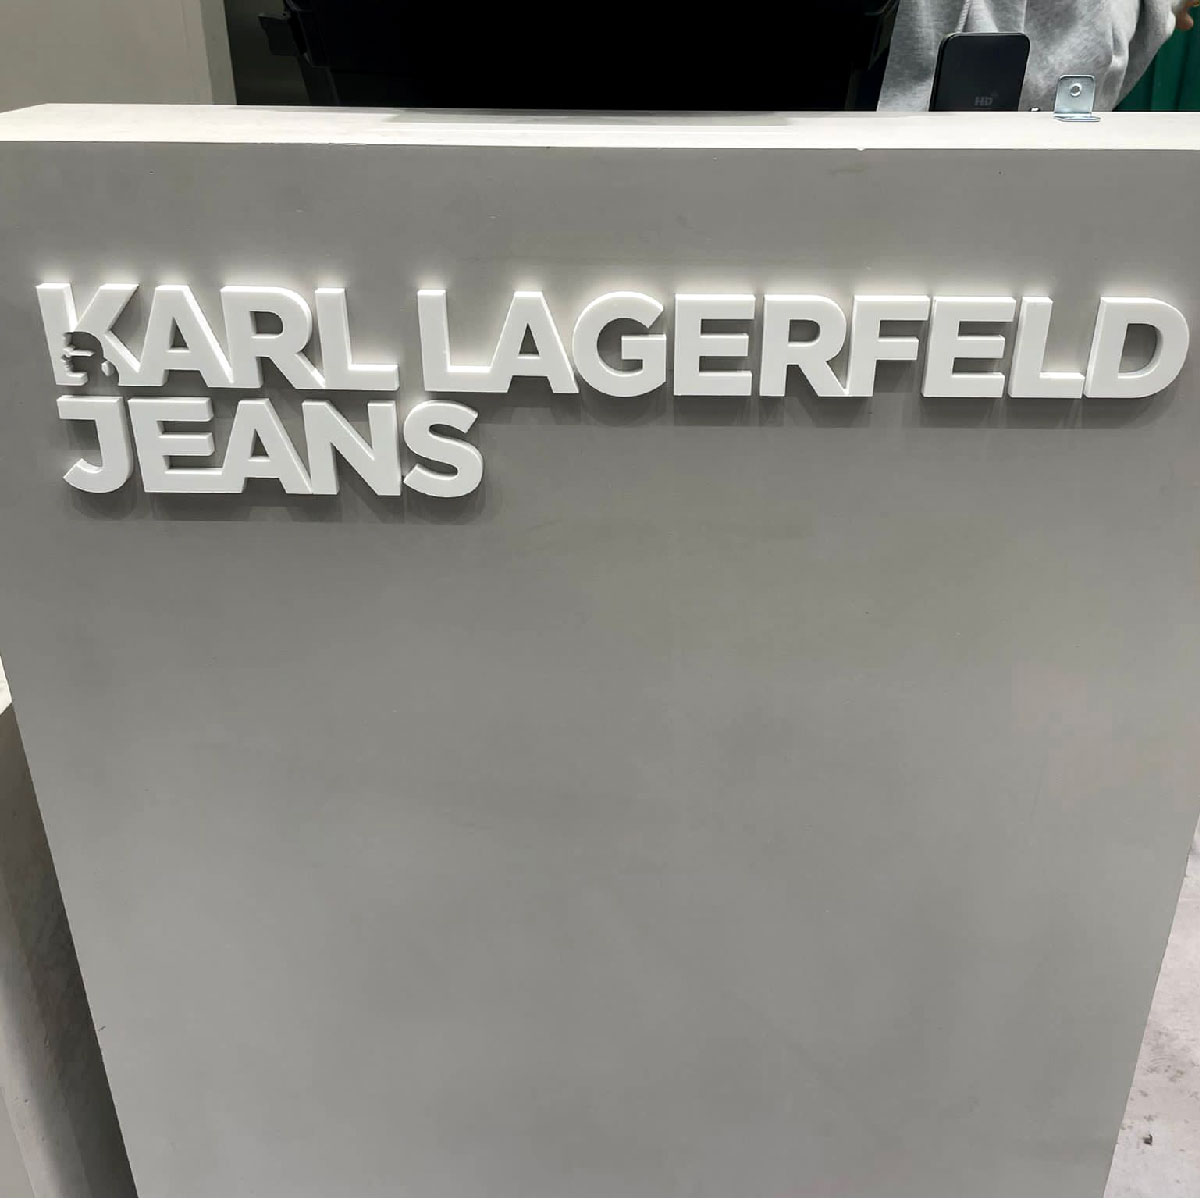 Karl Lagerfeld, onverlichte letters, Styling